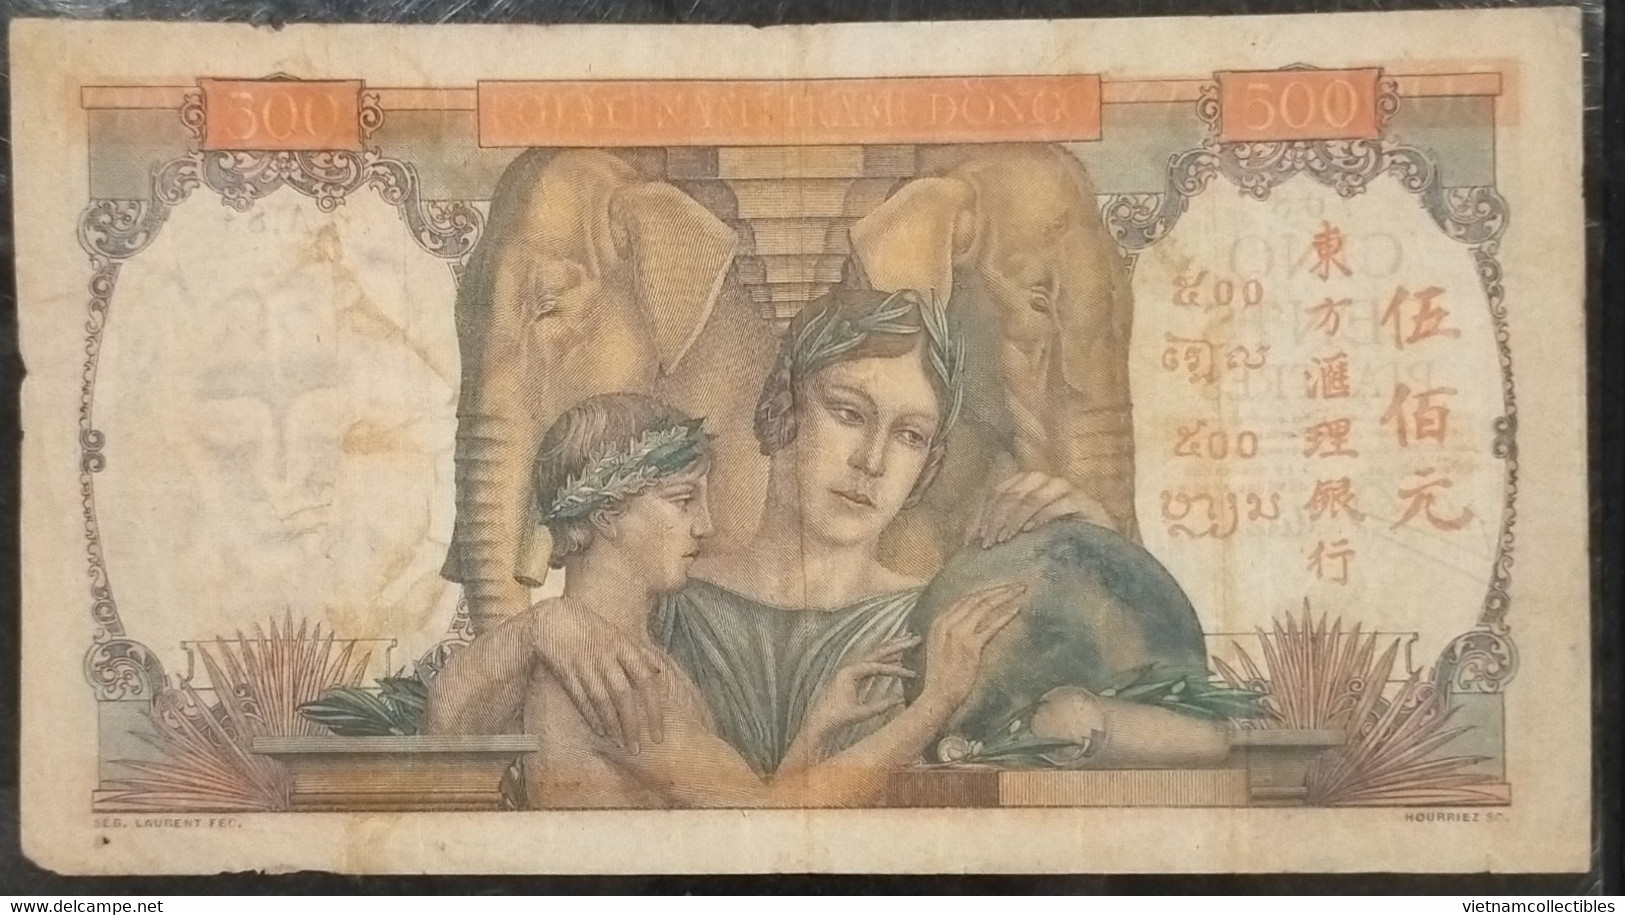 Indochina Indochine Vietnam Viet Nam Laos Cambodia 500 Piastres VF Banknote Note / Billet 1951 - Pick# 83 / 02 Photos - Indocina